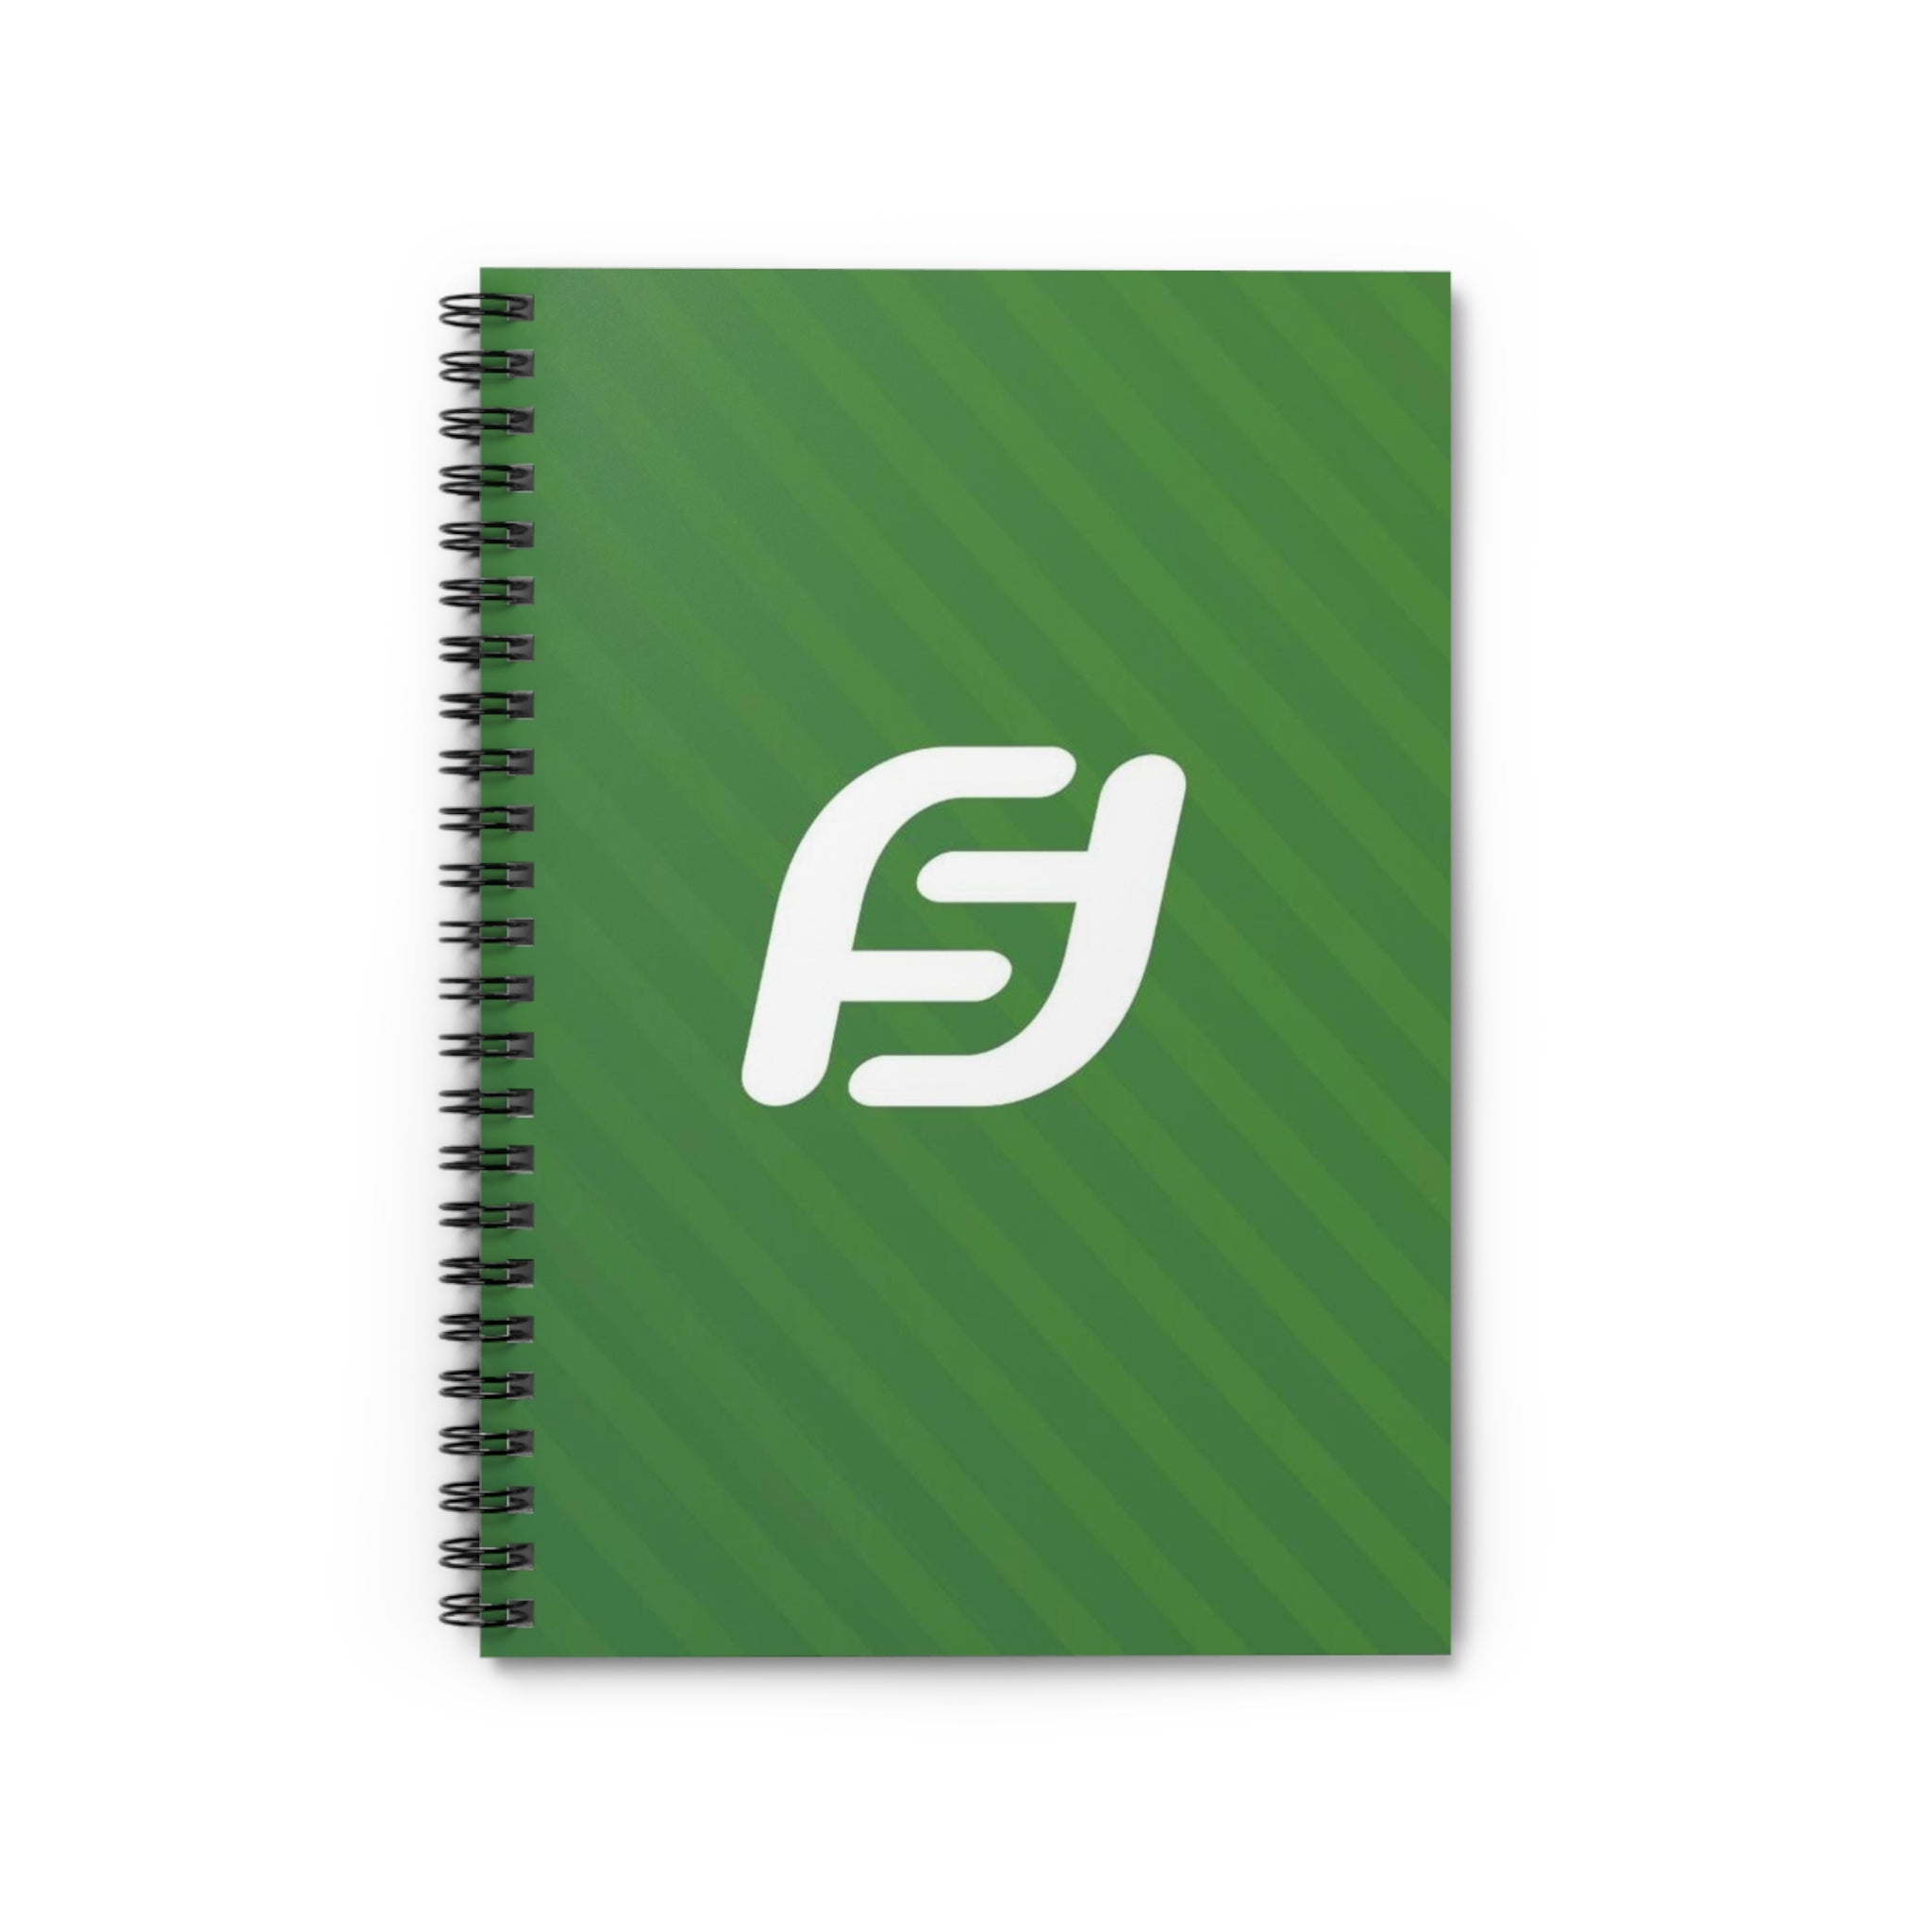 Solomon | Spiral Notebook - Ruled Line